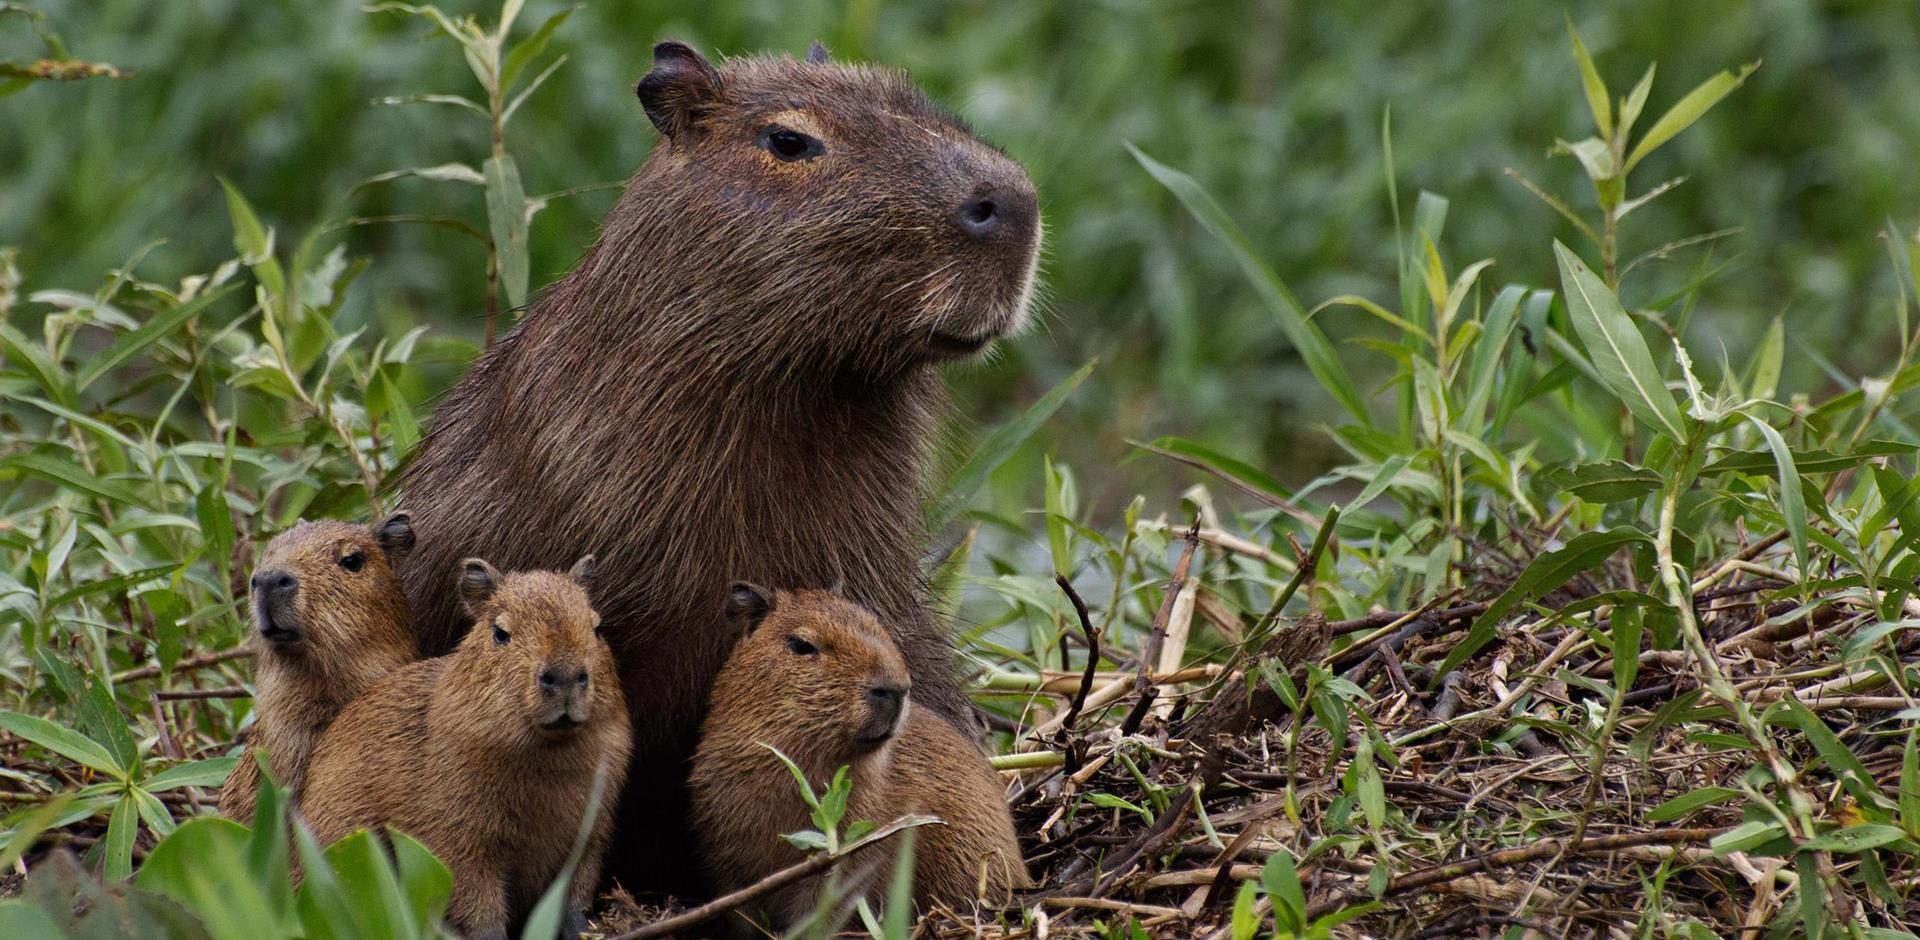 Capybara in Brazil